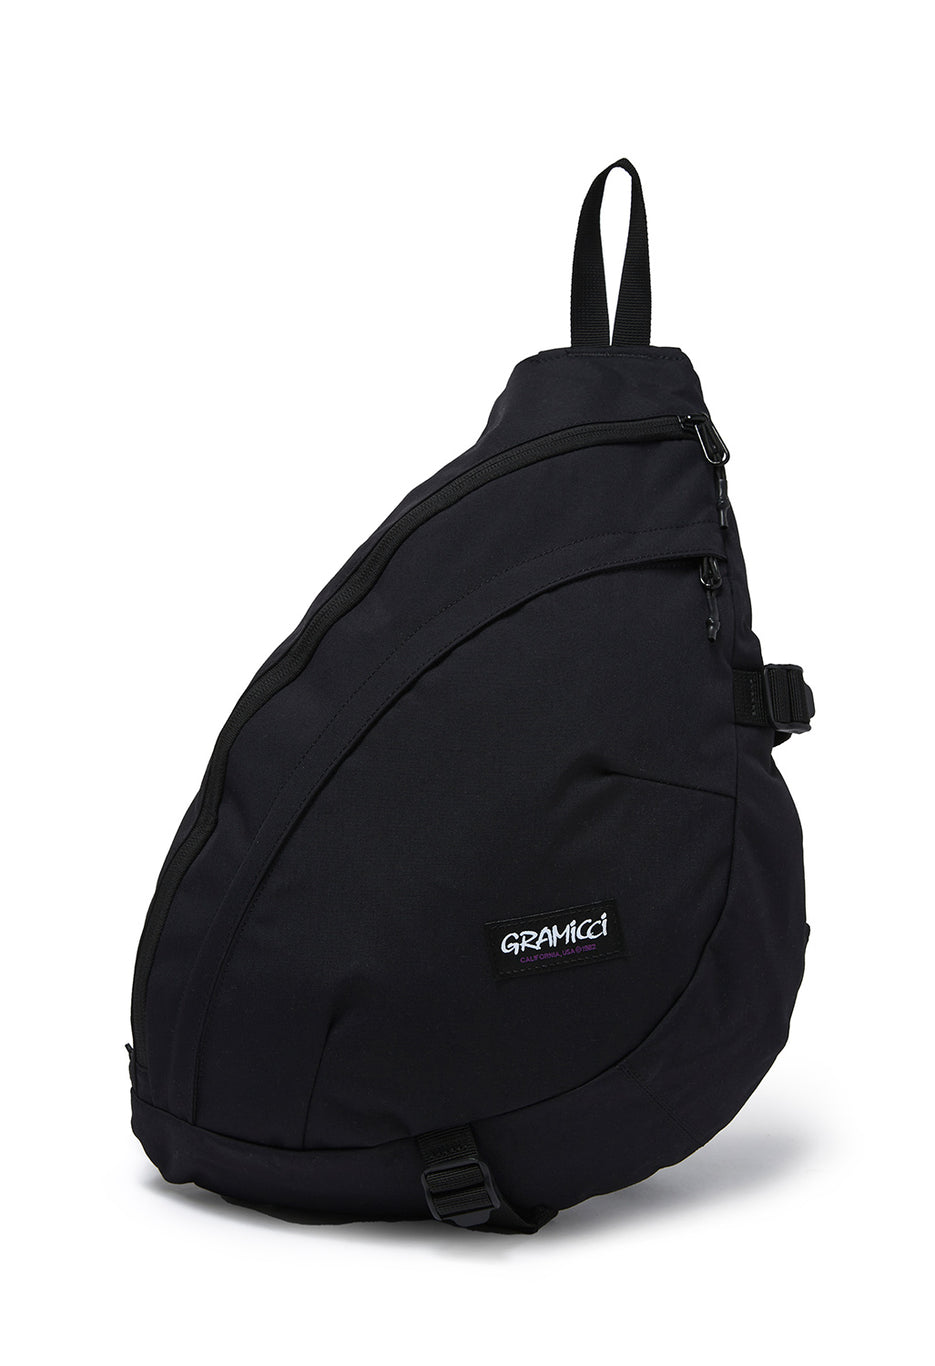 Gramicci Cordura Sling Bag - Black